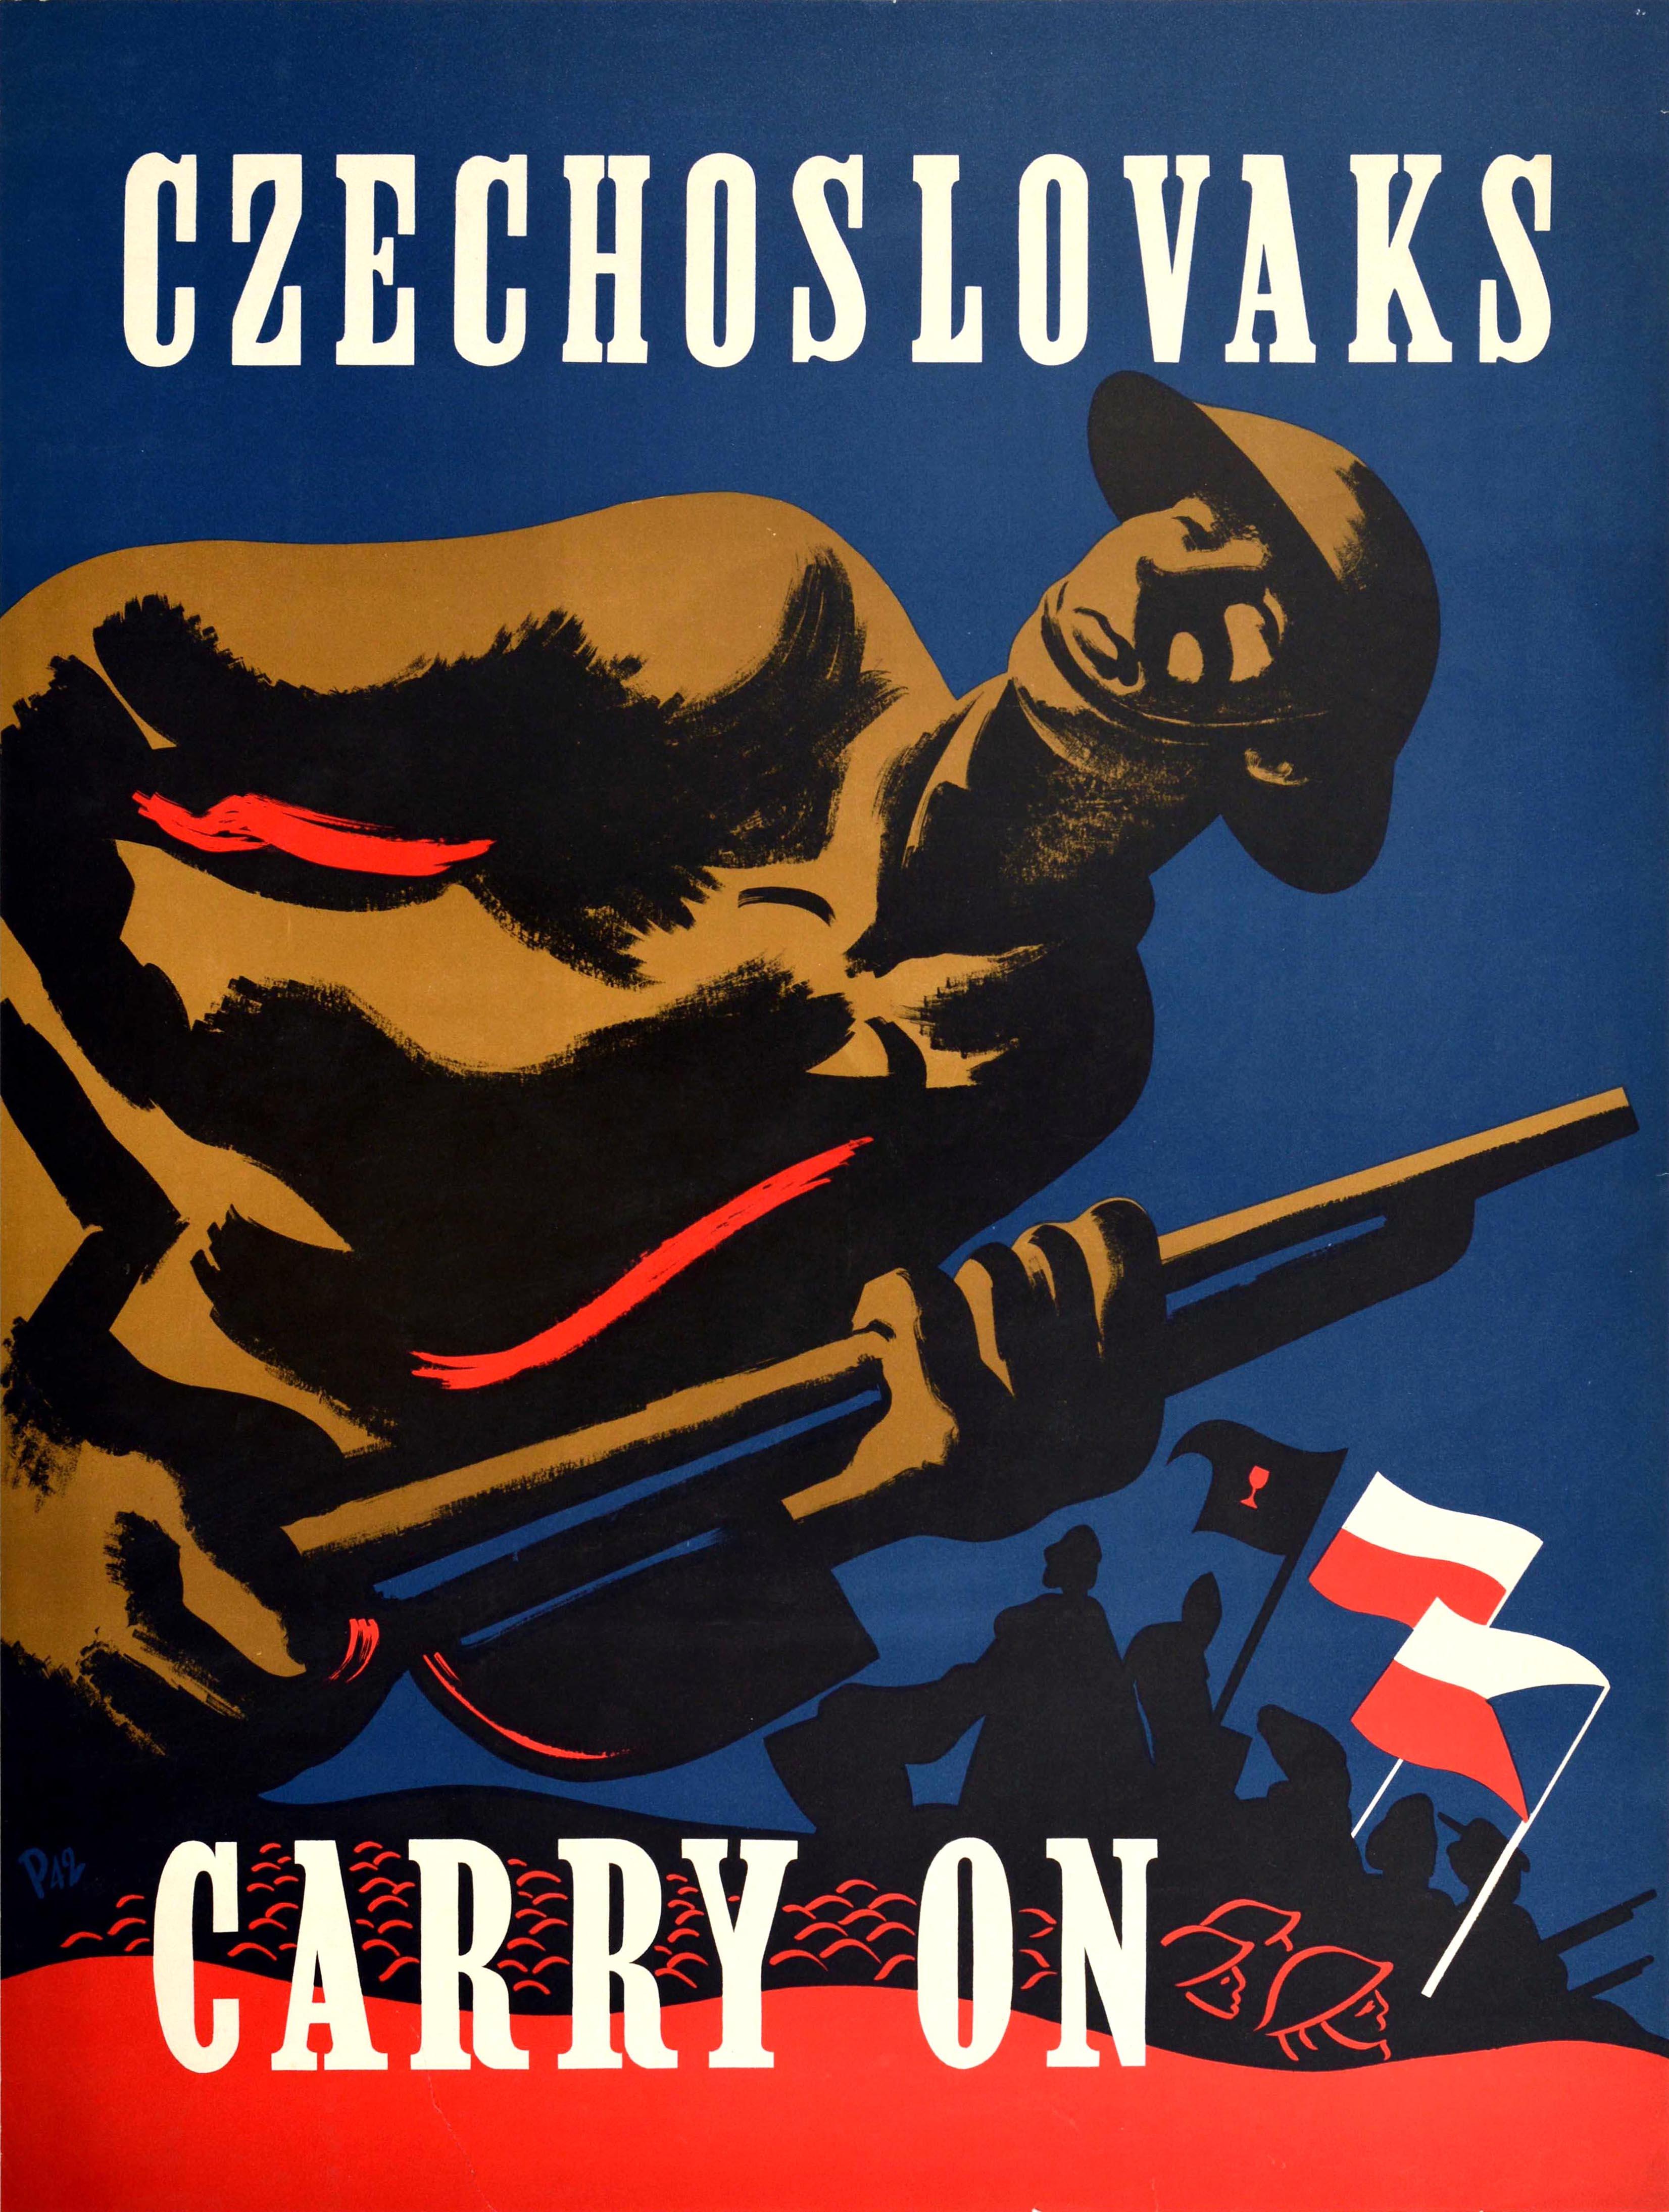 T. Peel Print - Original Vintage Poster Czechoslovaks Carry On WWII Soldiers Army Flags War Art